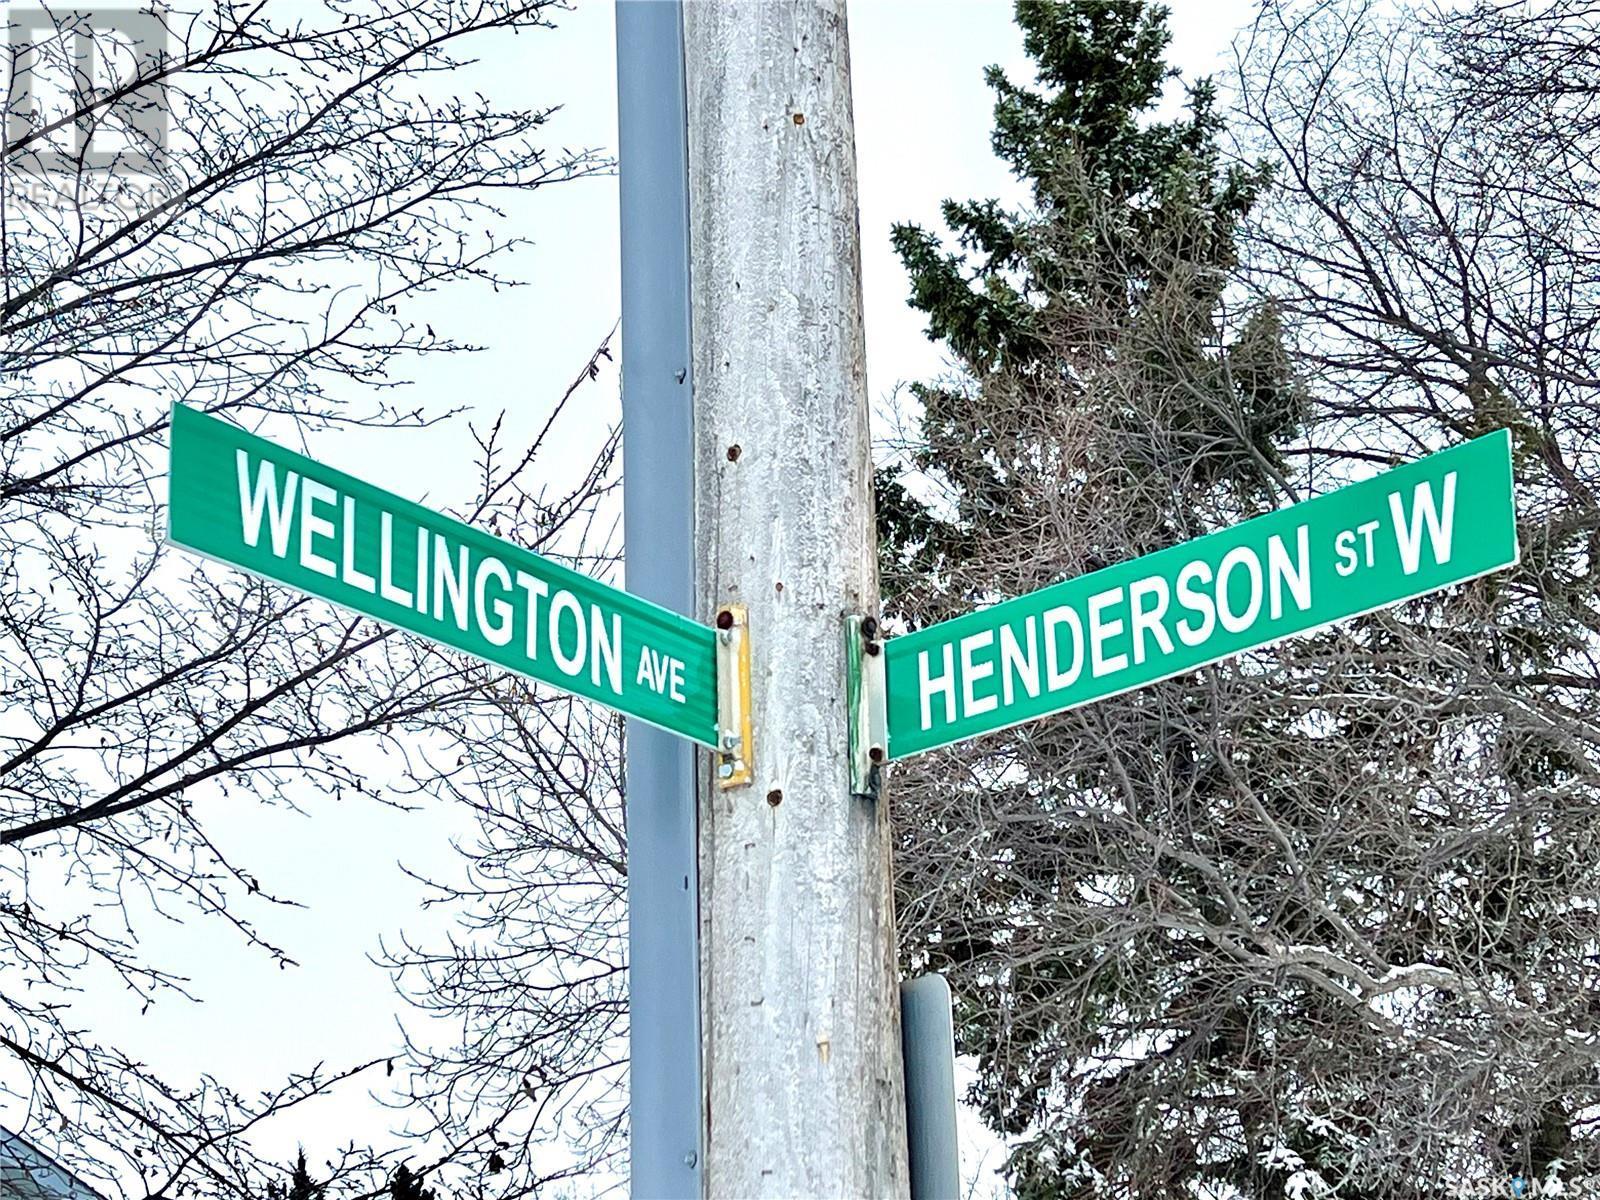 












125 Henderson STREET W

,
Yorkton,




Saskatchewan
S3N0A7

